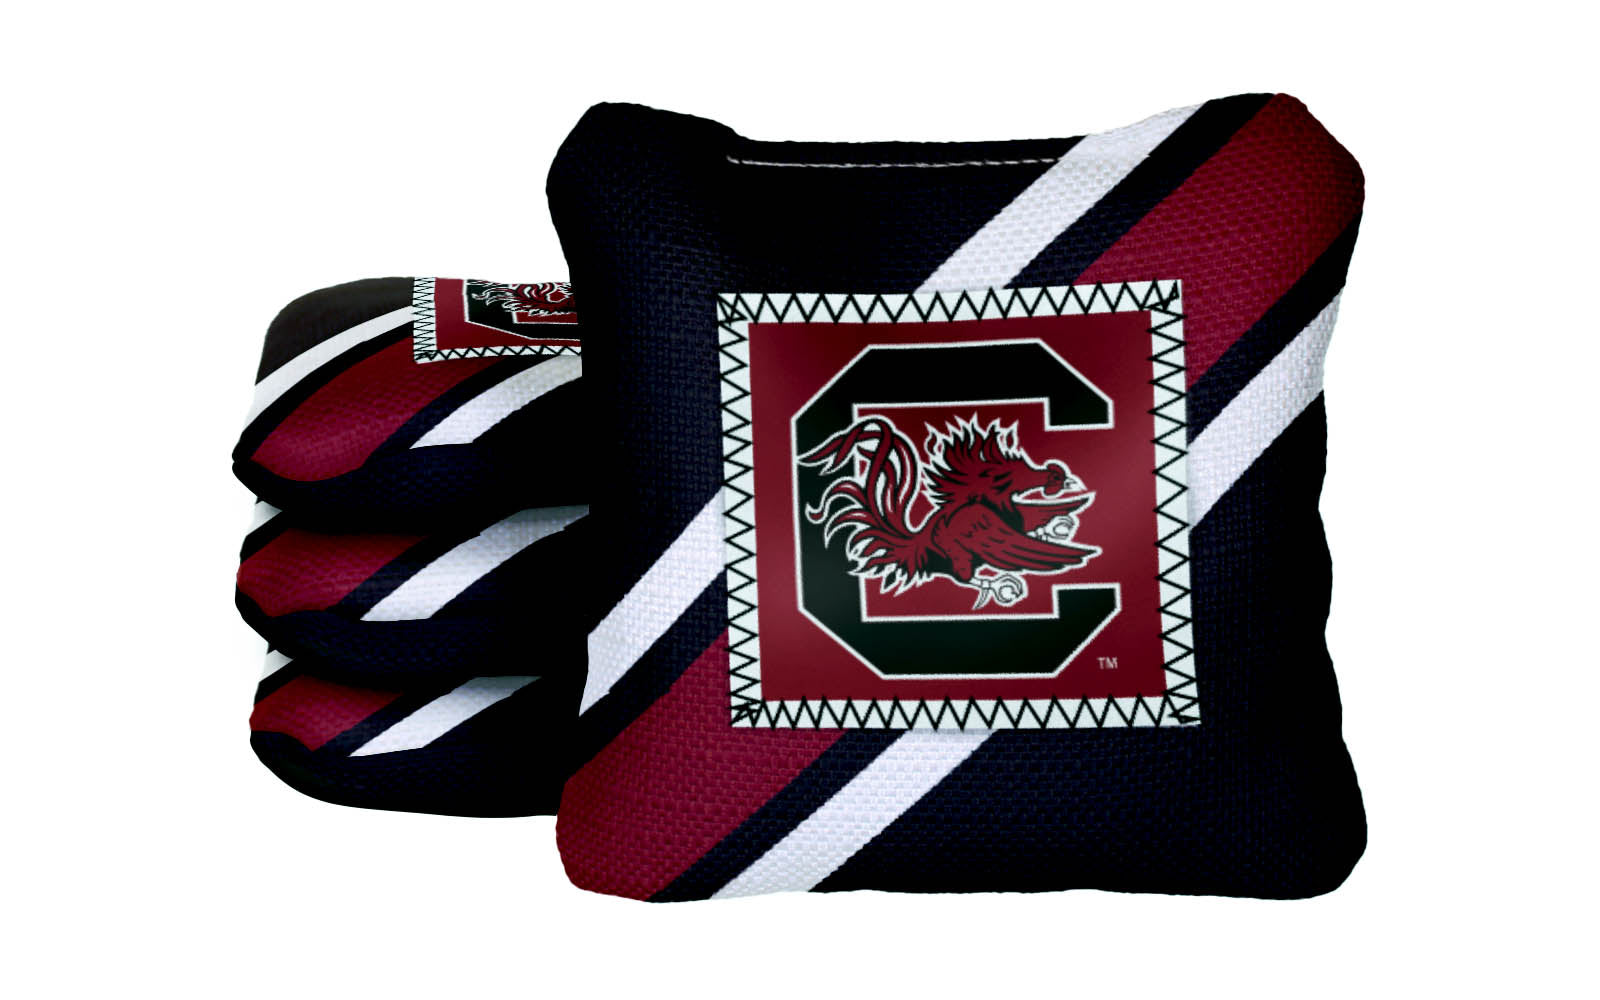 Officially Licensed Collegiate Cornhole Bags - Gamechangers - Set of 4 - South Carolina University